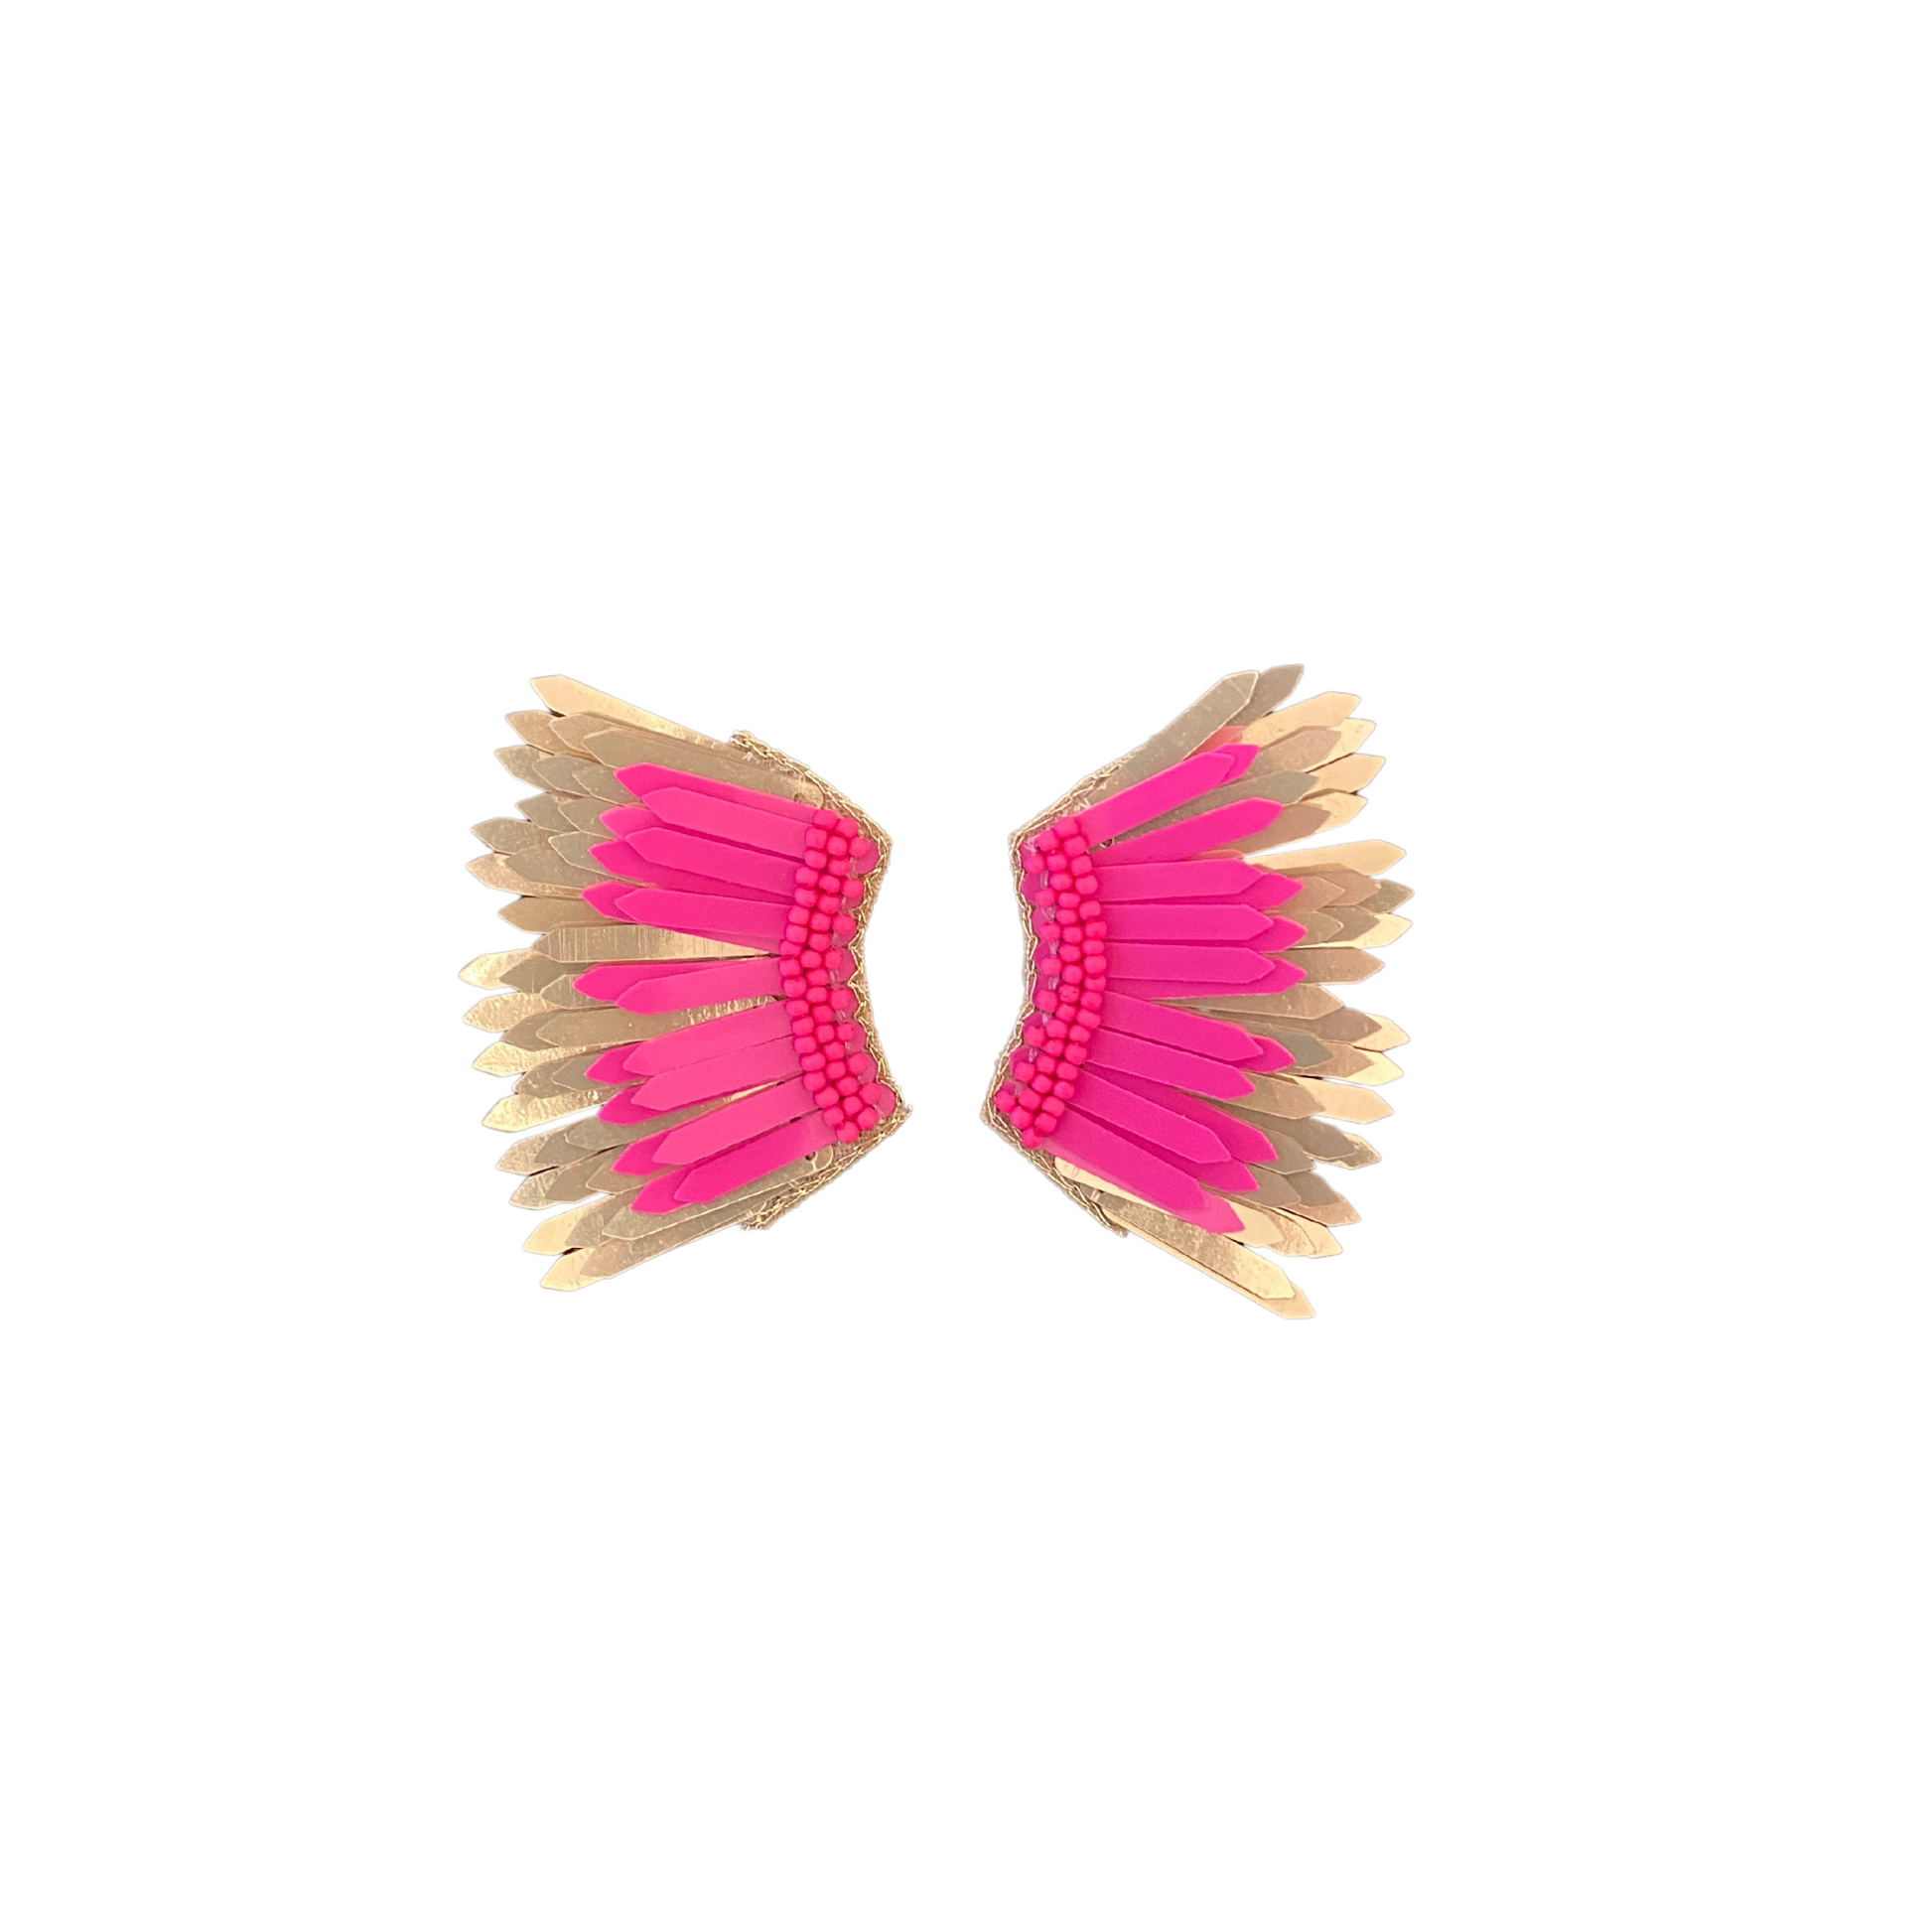 Hot Pink Angel Wing Earrings, Angel Wing Earrings, Wing Earrings, Earrings, Fashion Accessories, Accessories